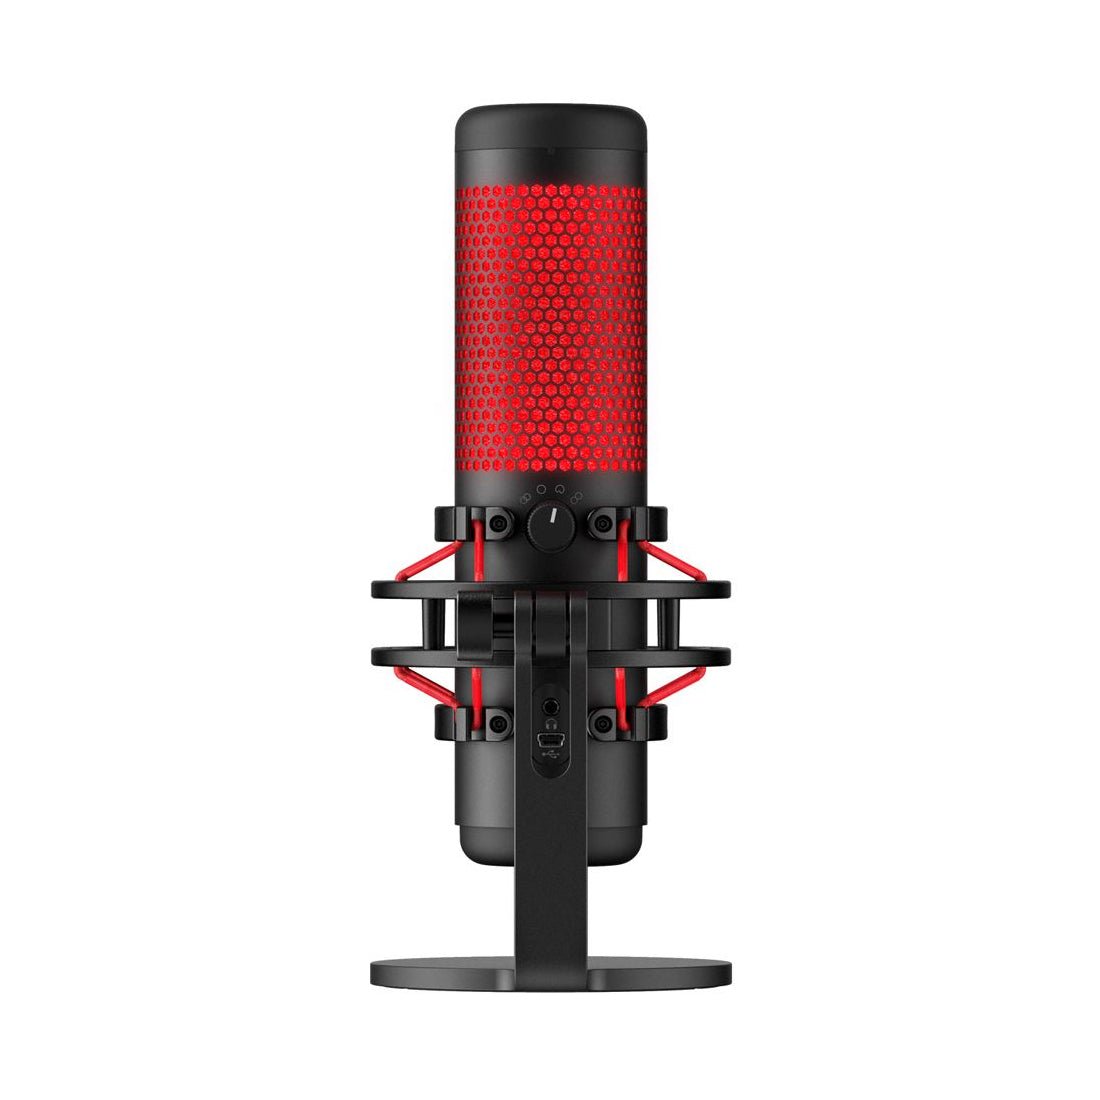 HyperX Quadcast Gaming/Streaming Microphone - Black & Red - ميكروفون - Store 974 | ستور ٩٧٤